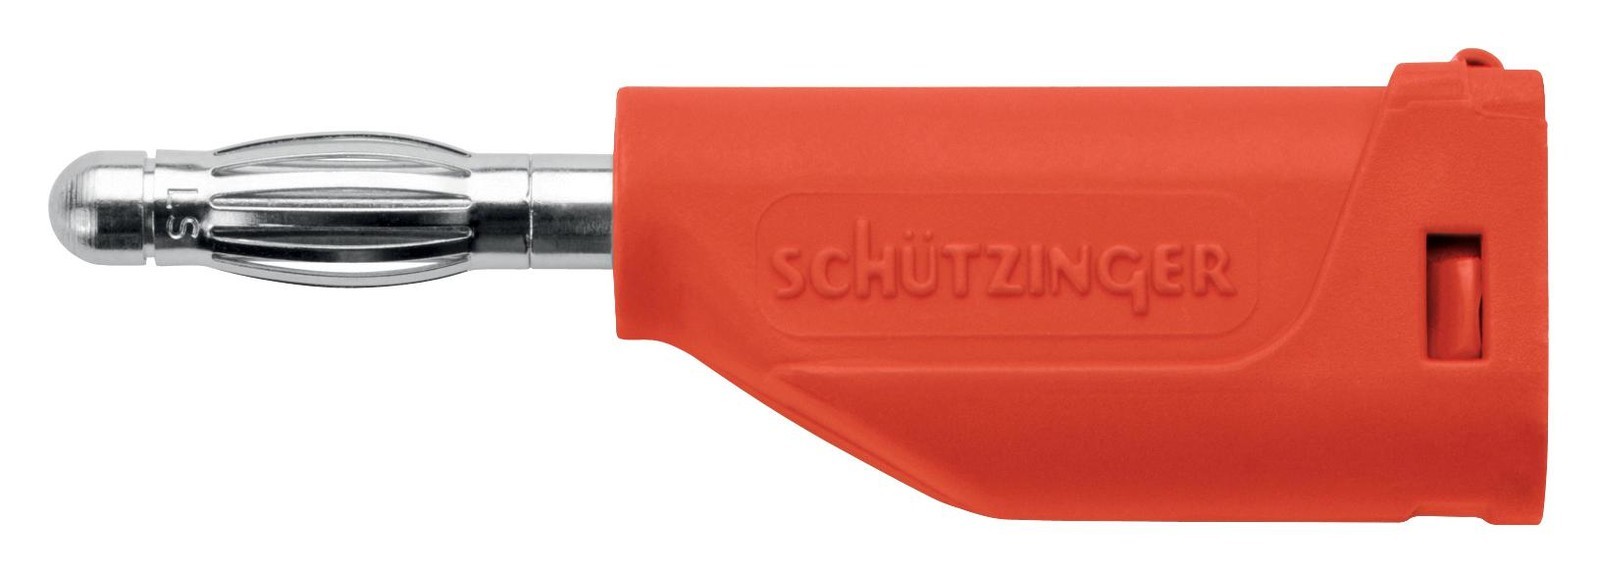 Schutzinger Fk 15 S NI / 1 / Rt Connector, Banana, Plug, 16A, Red, Screw